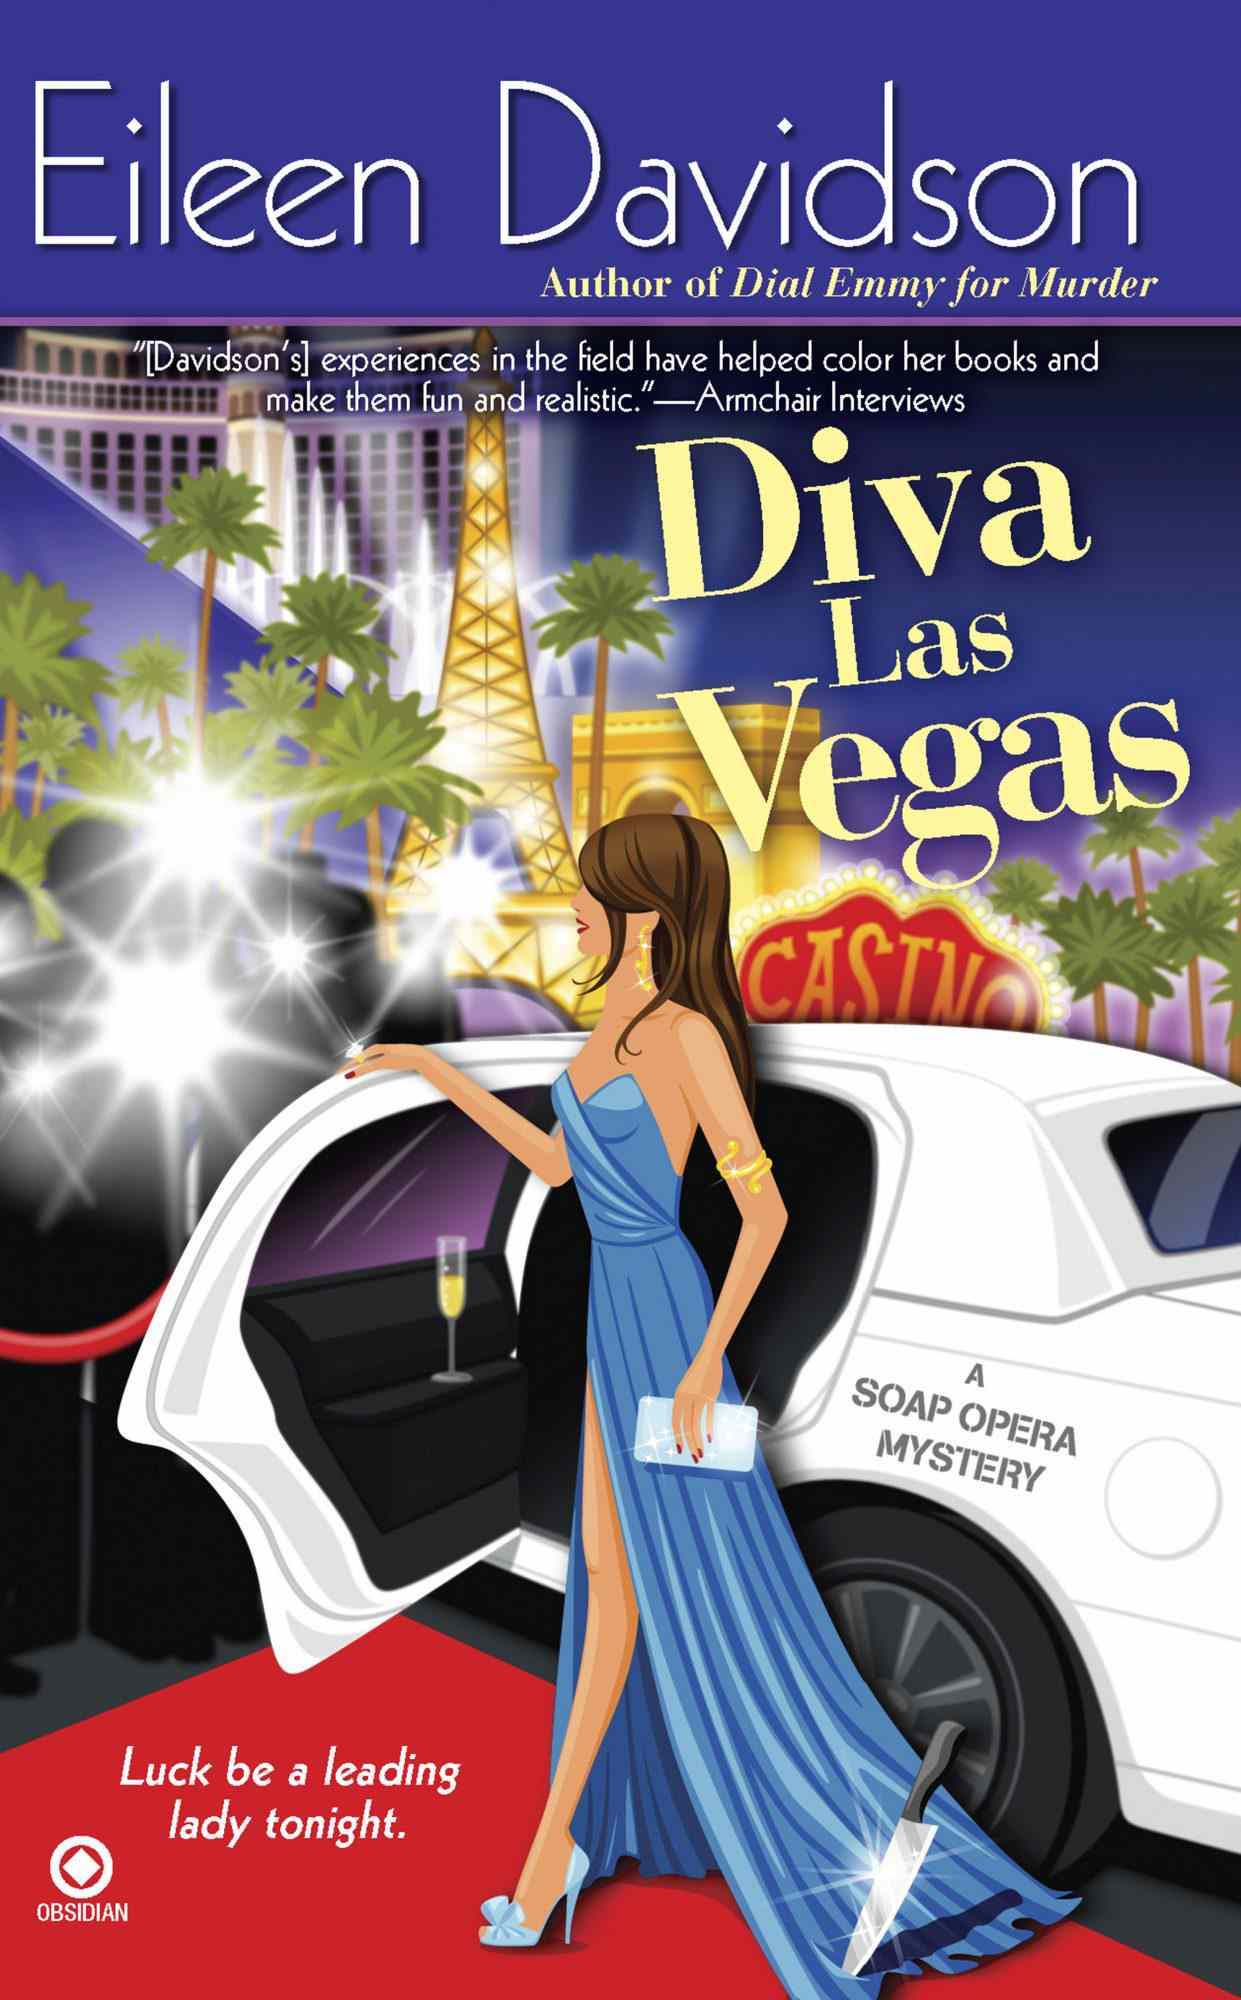 Diva Las Vegas, by Eileen Davidson